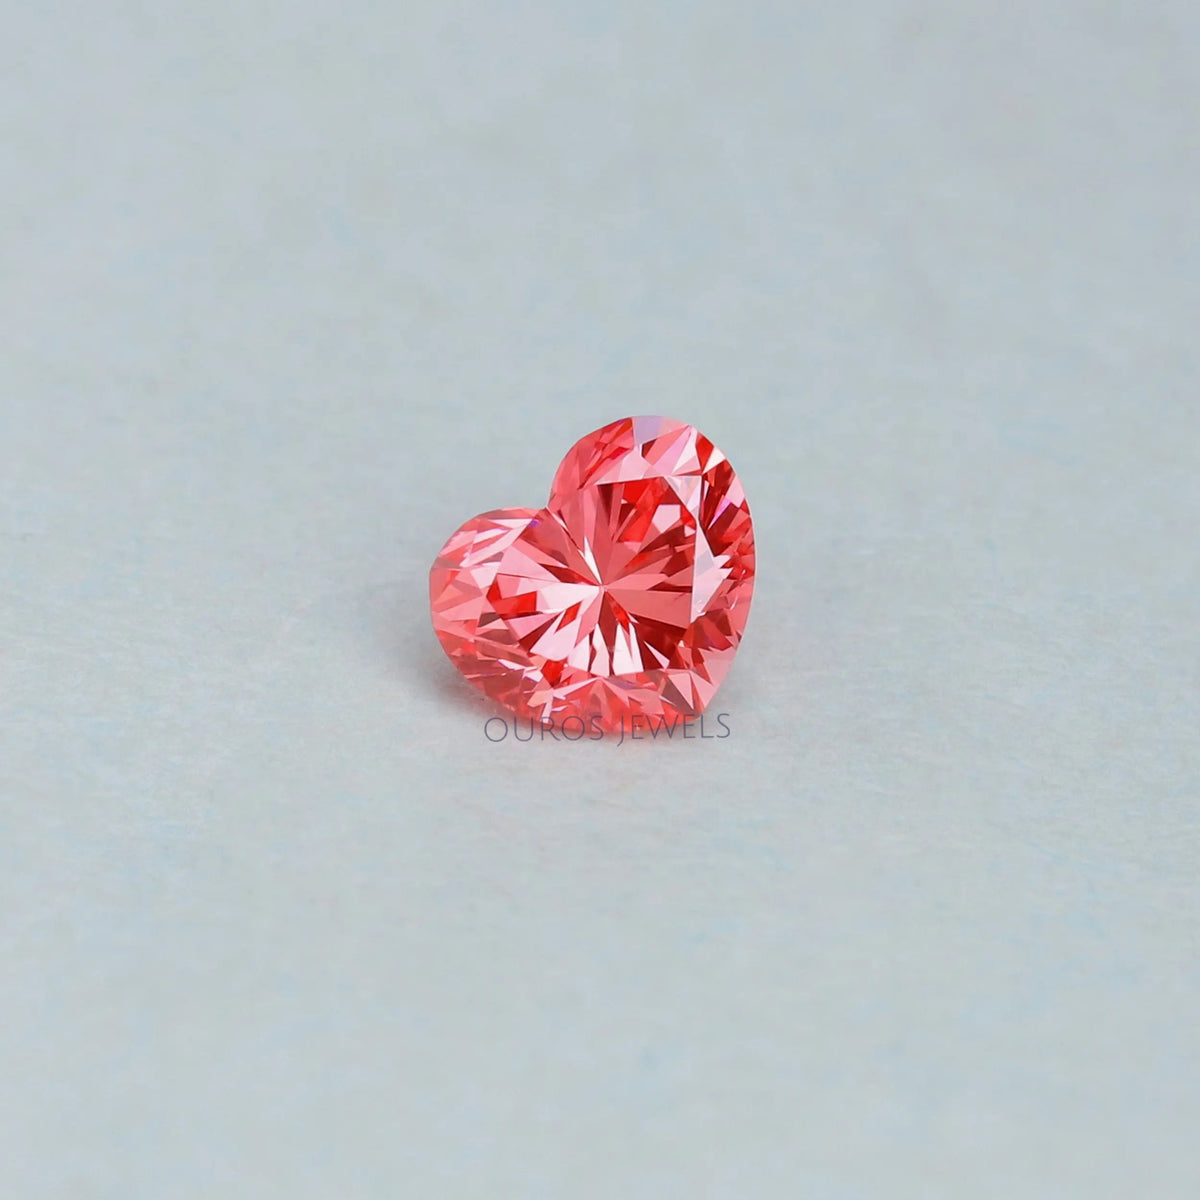 Wholesale Loose Gemstone 8*8mm Sakura Pink Heart Cut Lab Grown